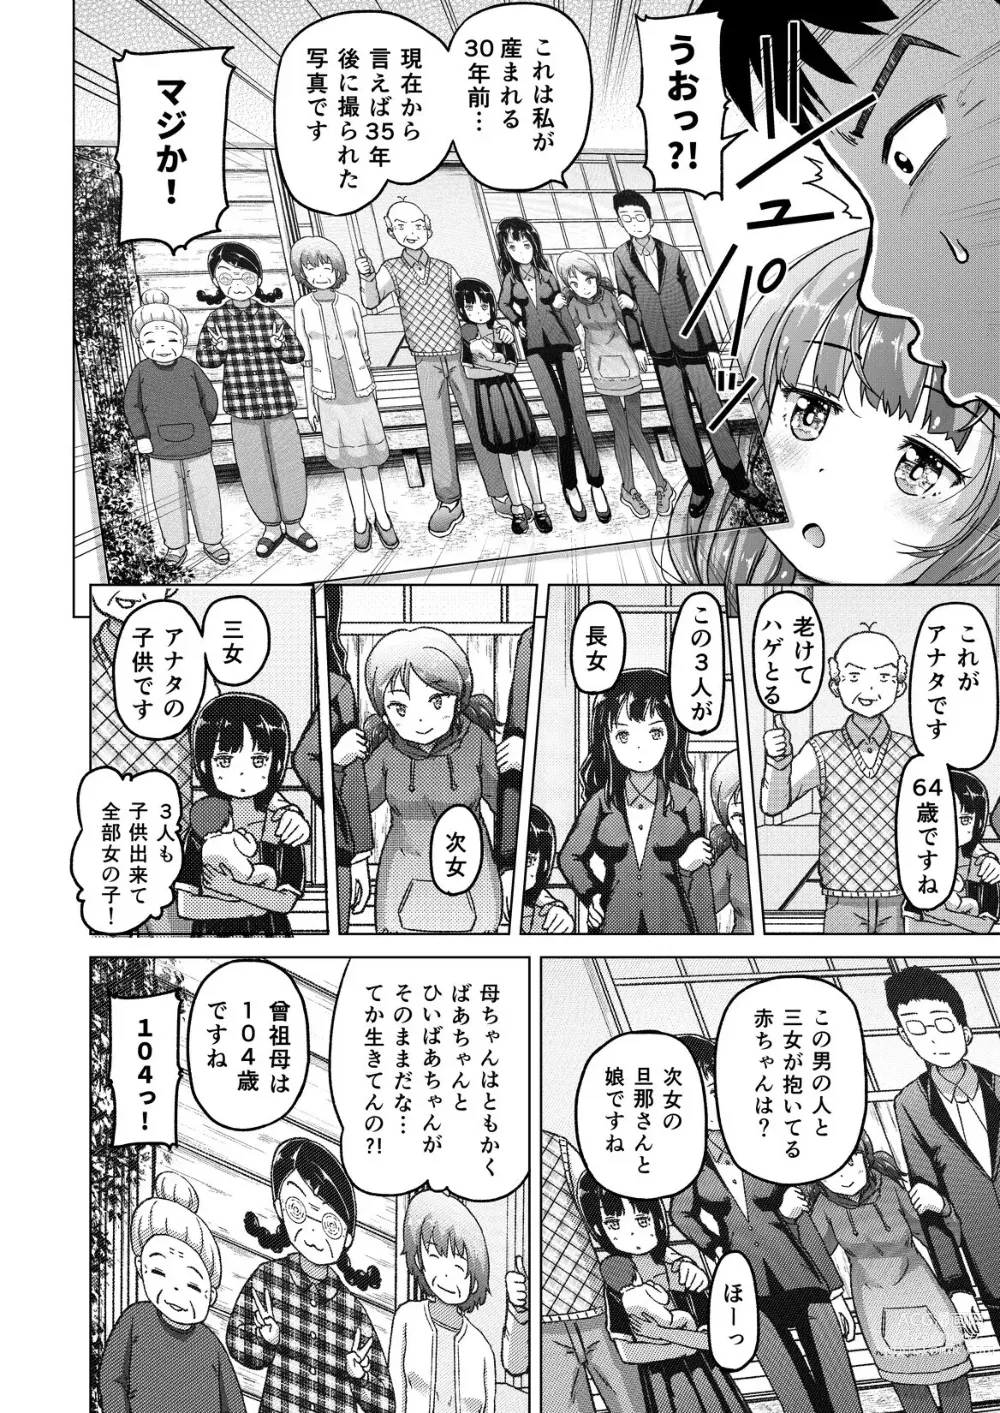 Page 9 of doujinshi Toki o Kakeru Lolicon